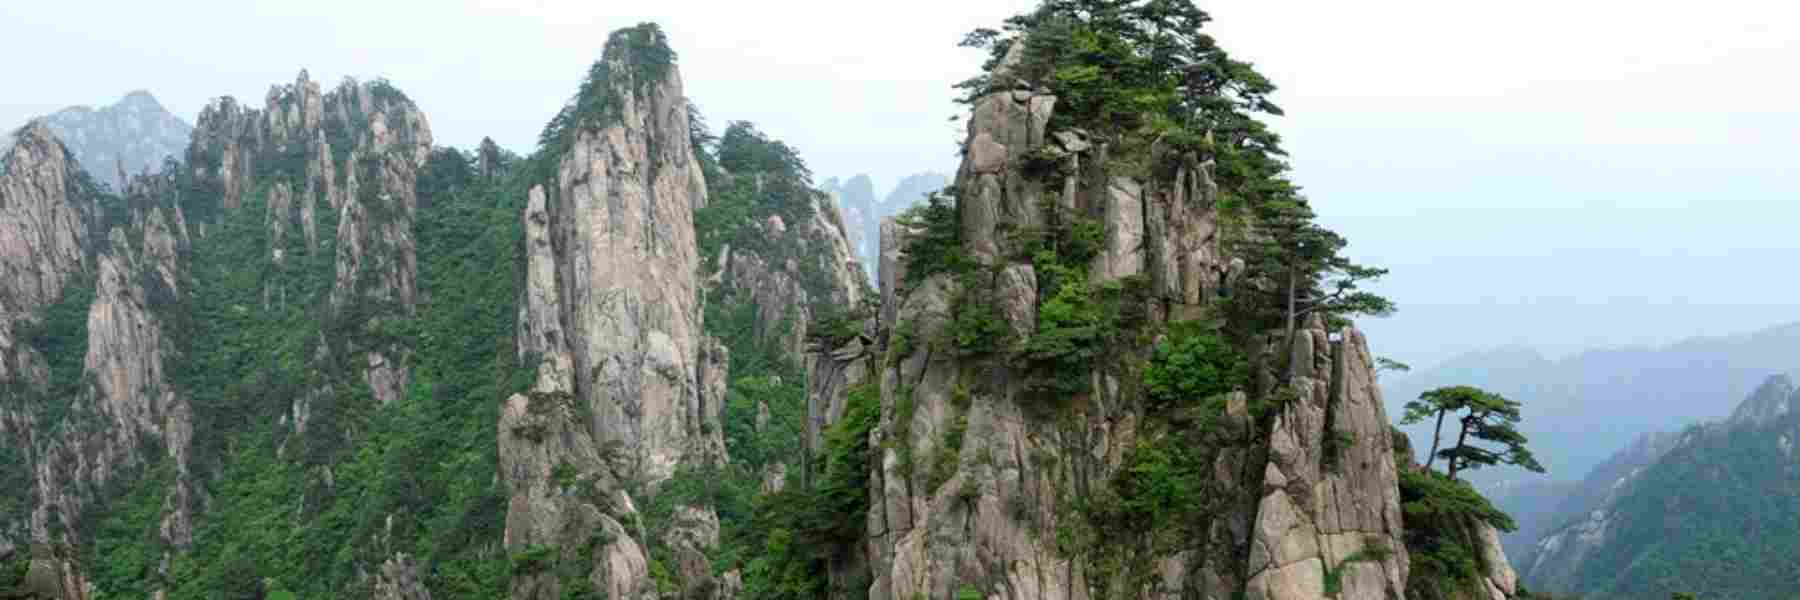 Mt. huangshan